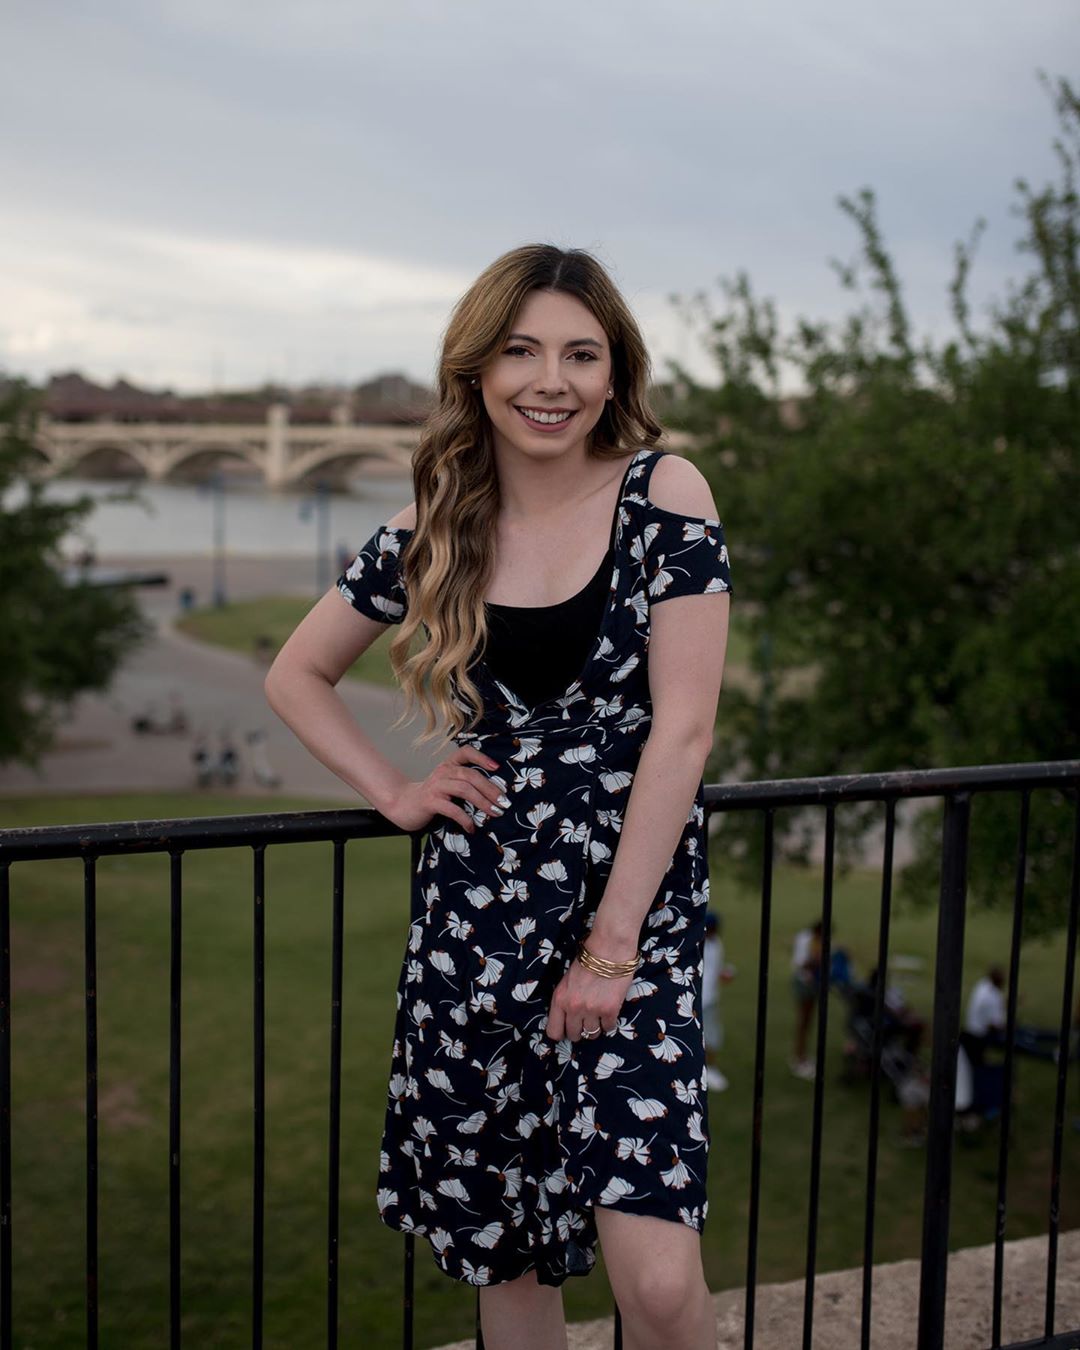 Casey Blake – Most Pretty Transgender Girl in Floral Dress Instagram